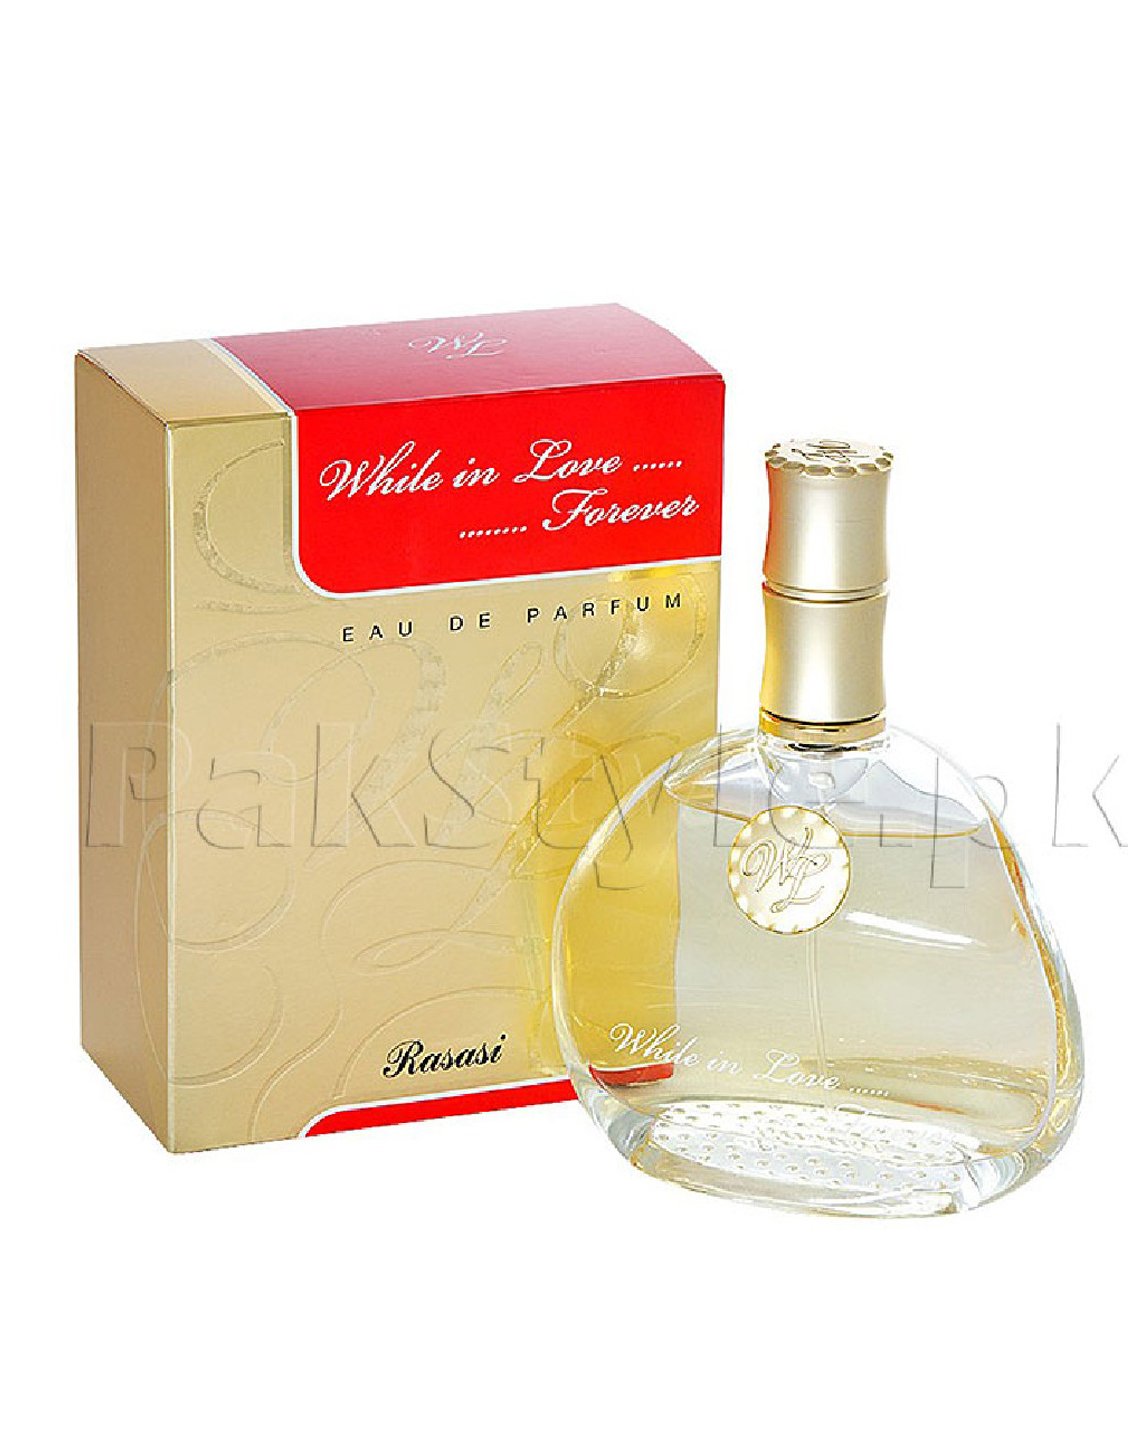 Love Forever Perfume Price in Pakistan 